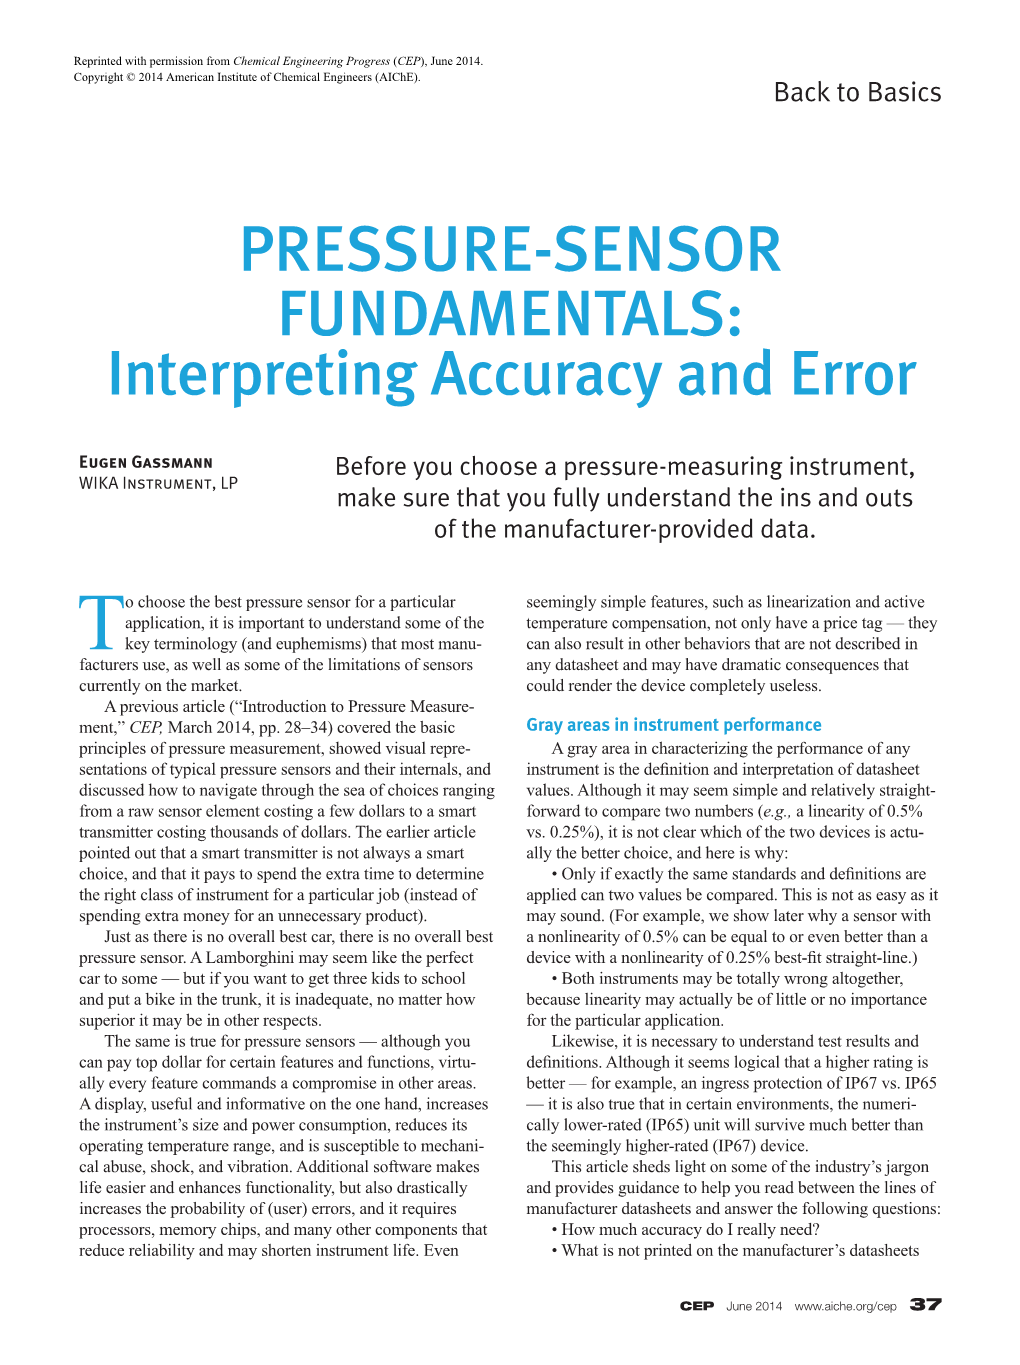 Pressure-Sensor Fundamentals: Interpreting Accuracy and Error